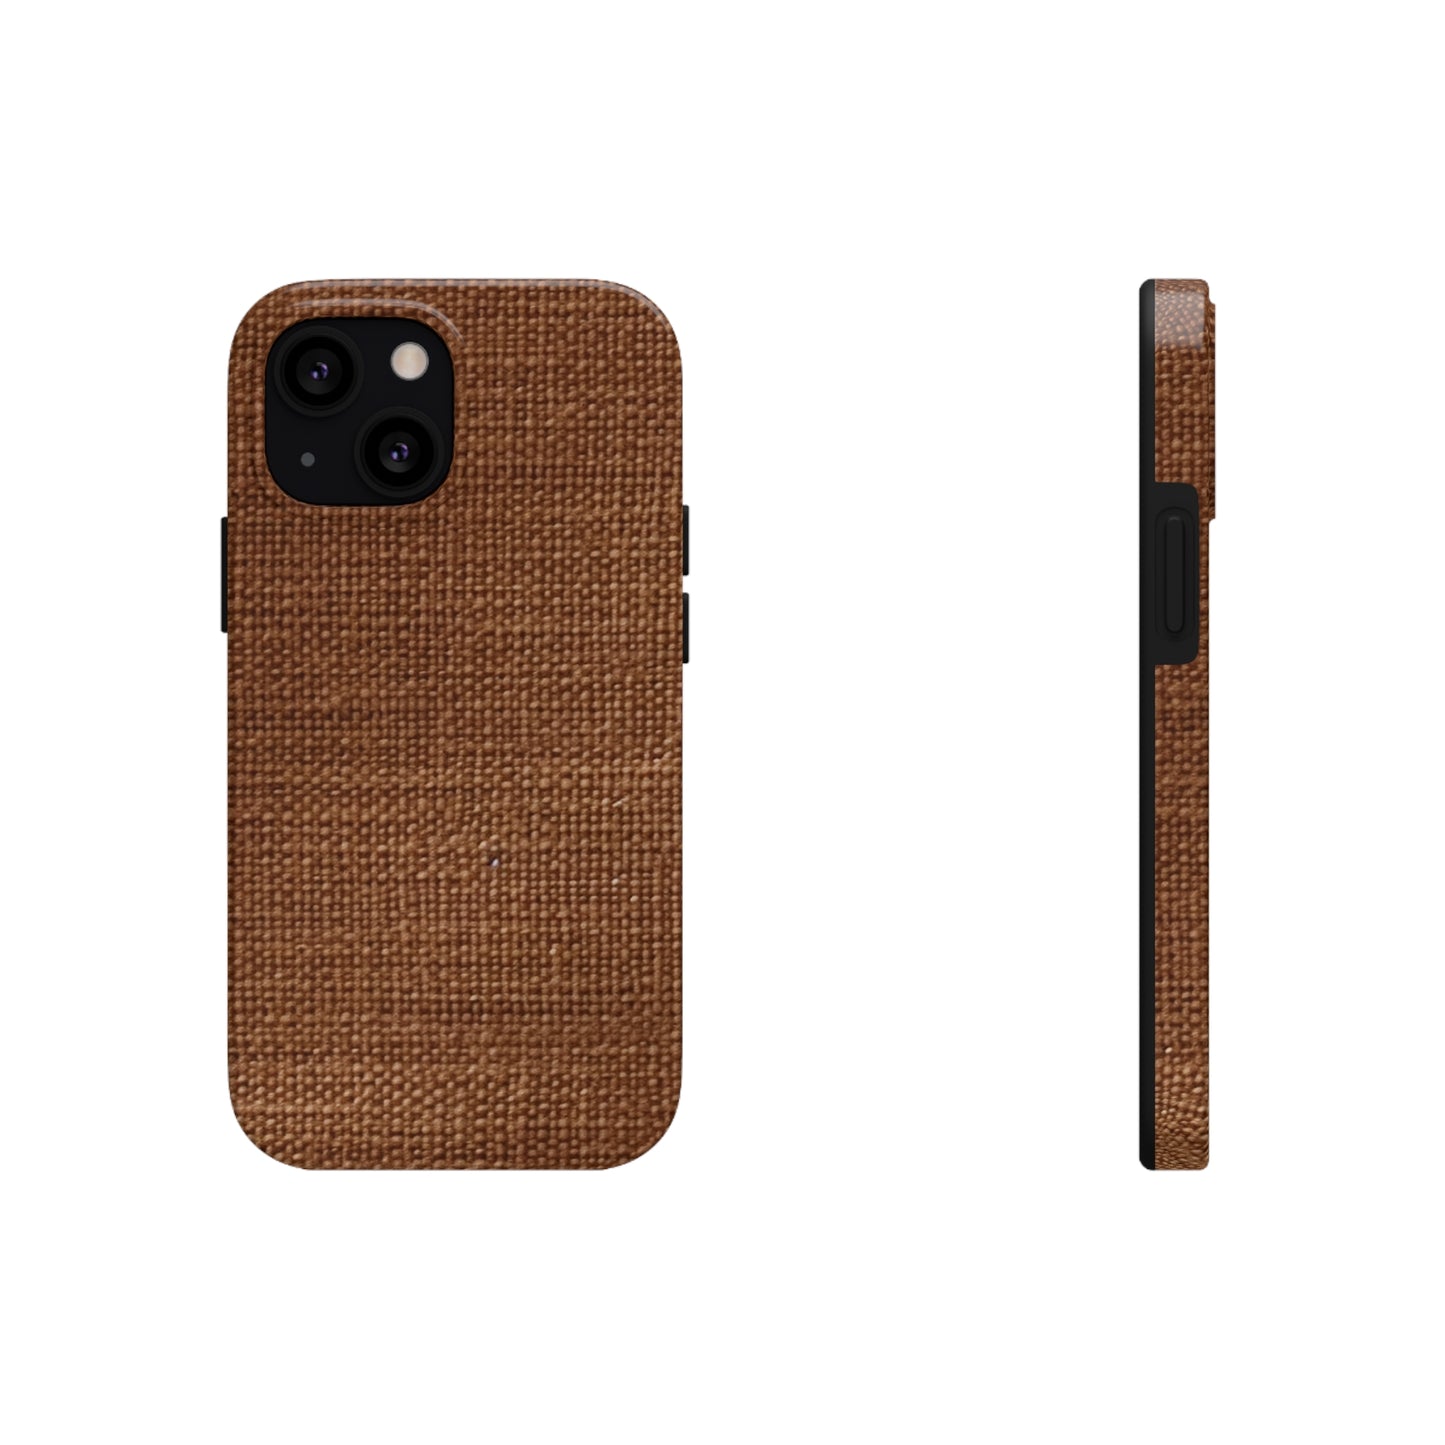 Luxe Dark Brown: Denim-Inspired, Distinctively Textured Fabric - Tough Phone Cases